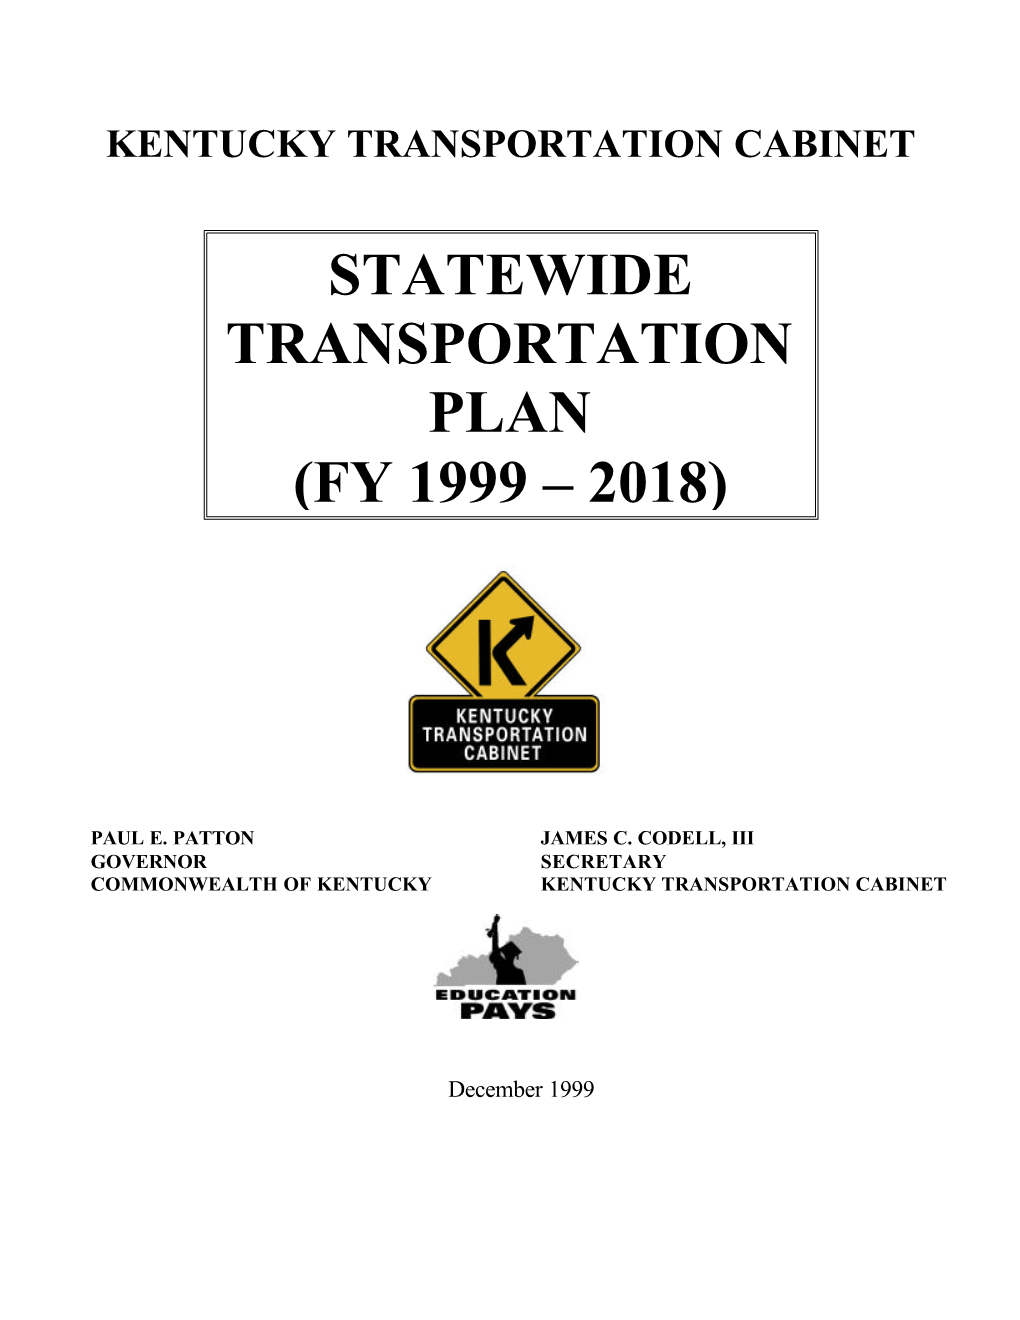 Statewide Transportation Plan (Fy 1999 – 2018)